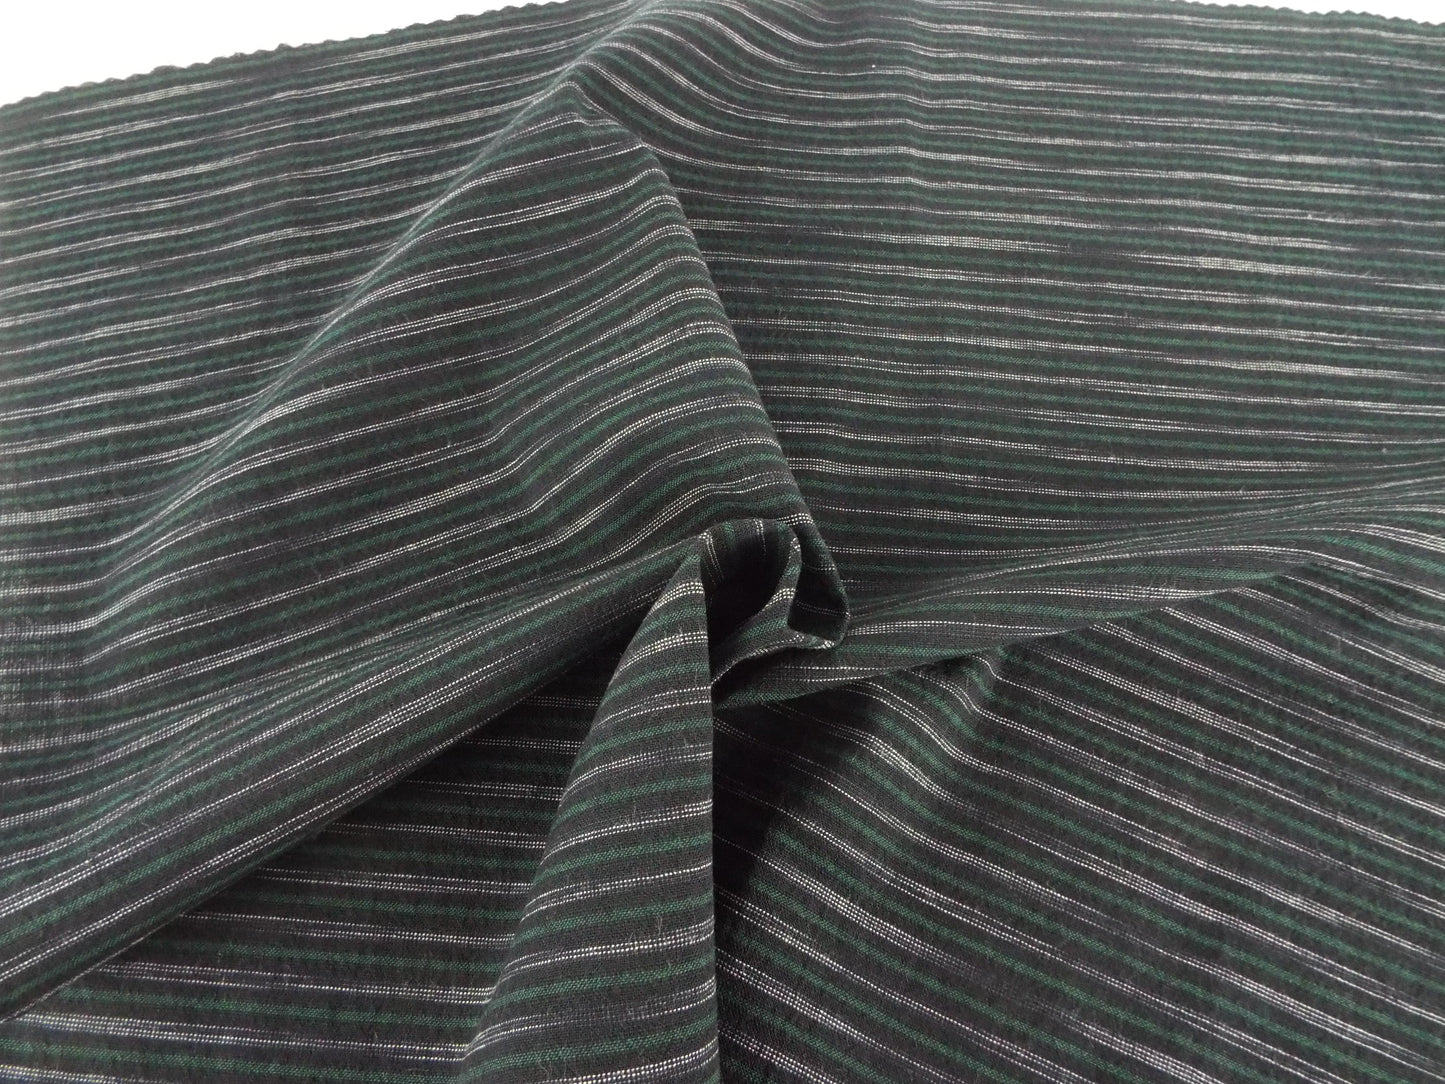 Kameda striped cotton fabric ordinary ground # 9 ABC 3 patterns